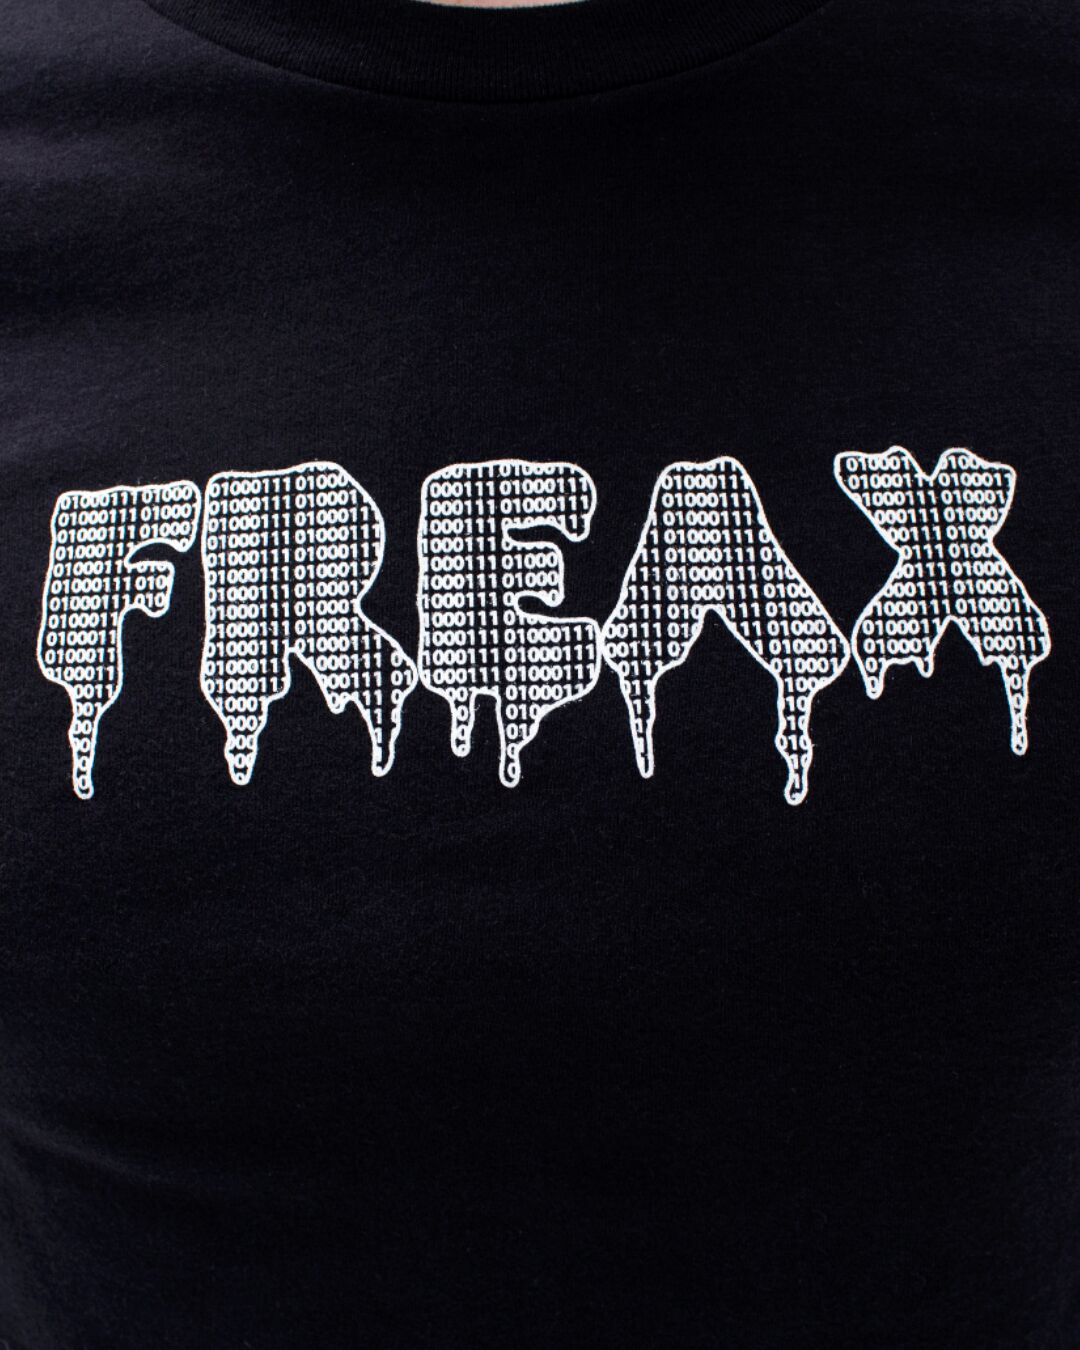 t. Weeyn FREAX with binary code inside unisex t-shirt closeup